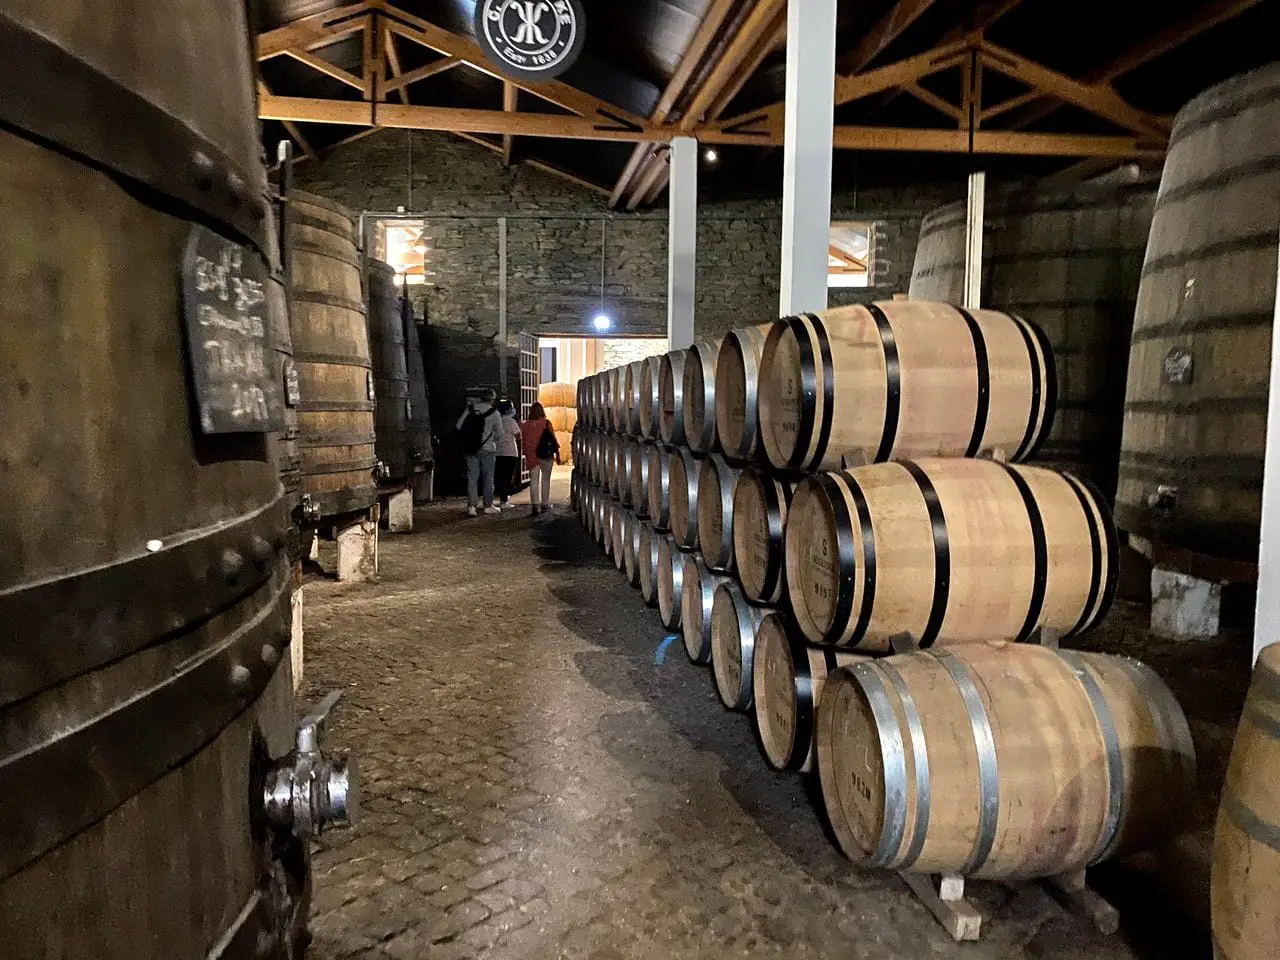 Wine cellar with wine barrels